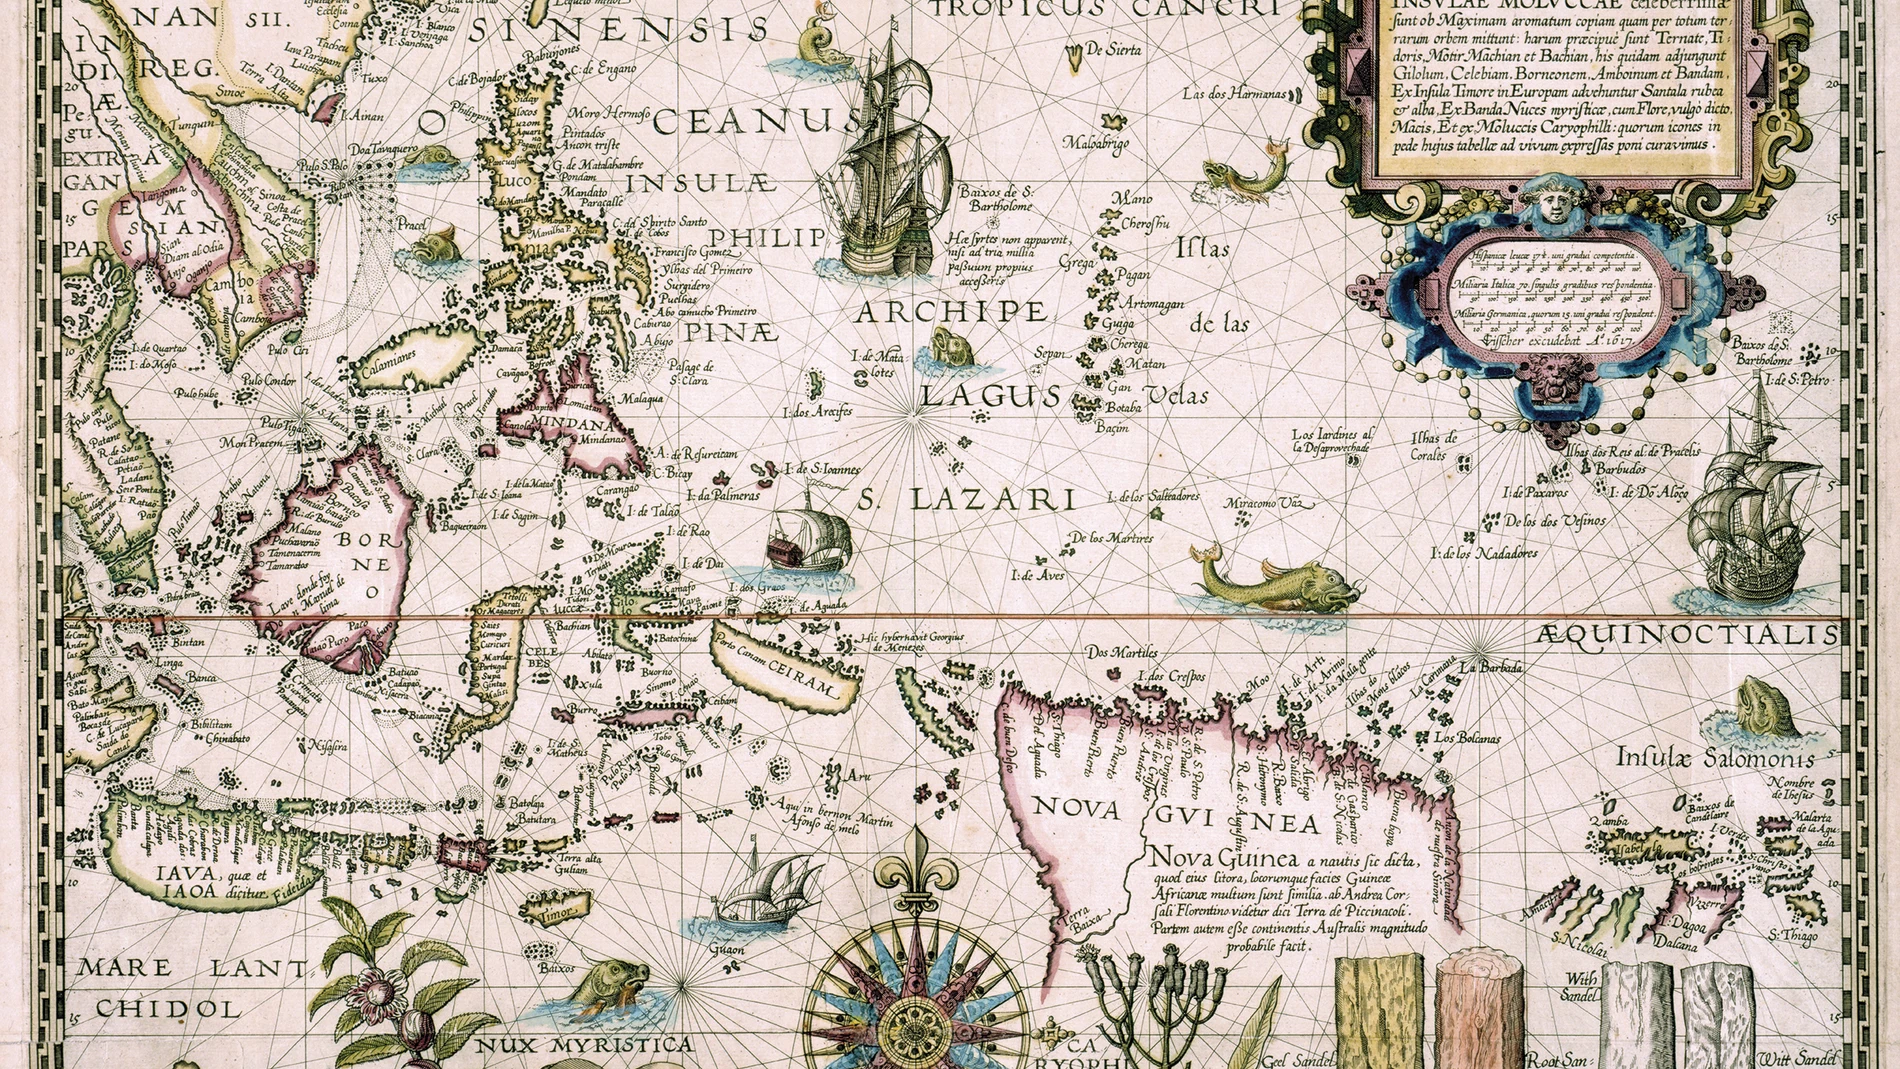 Mapa de las islas Molucas de Petrus Plancius, 1594 (Paulus Swaen)